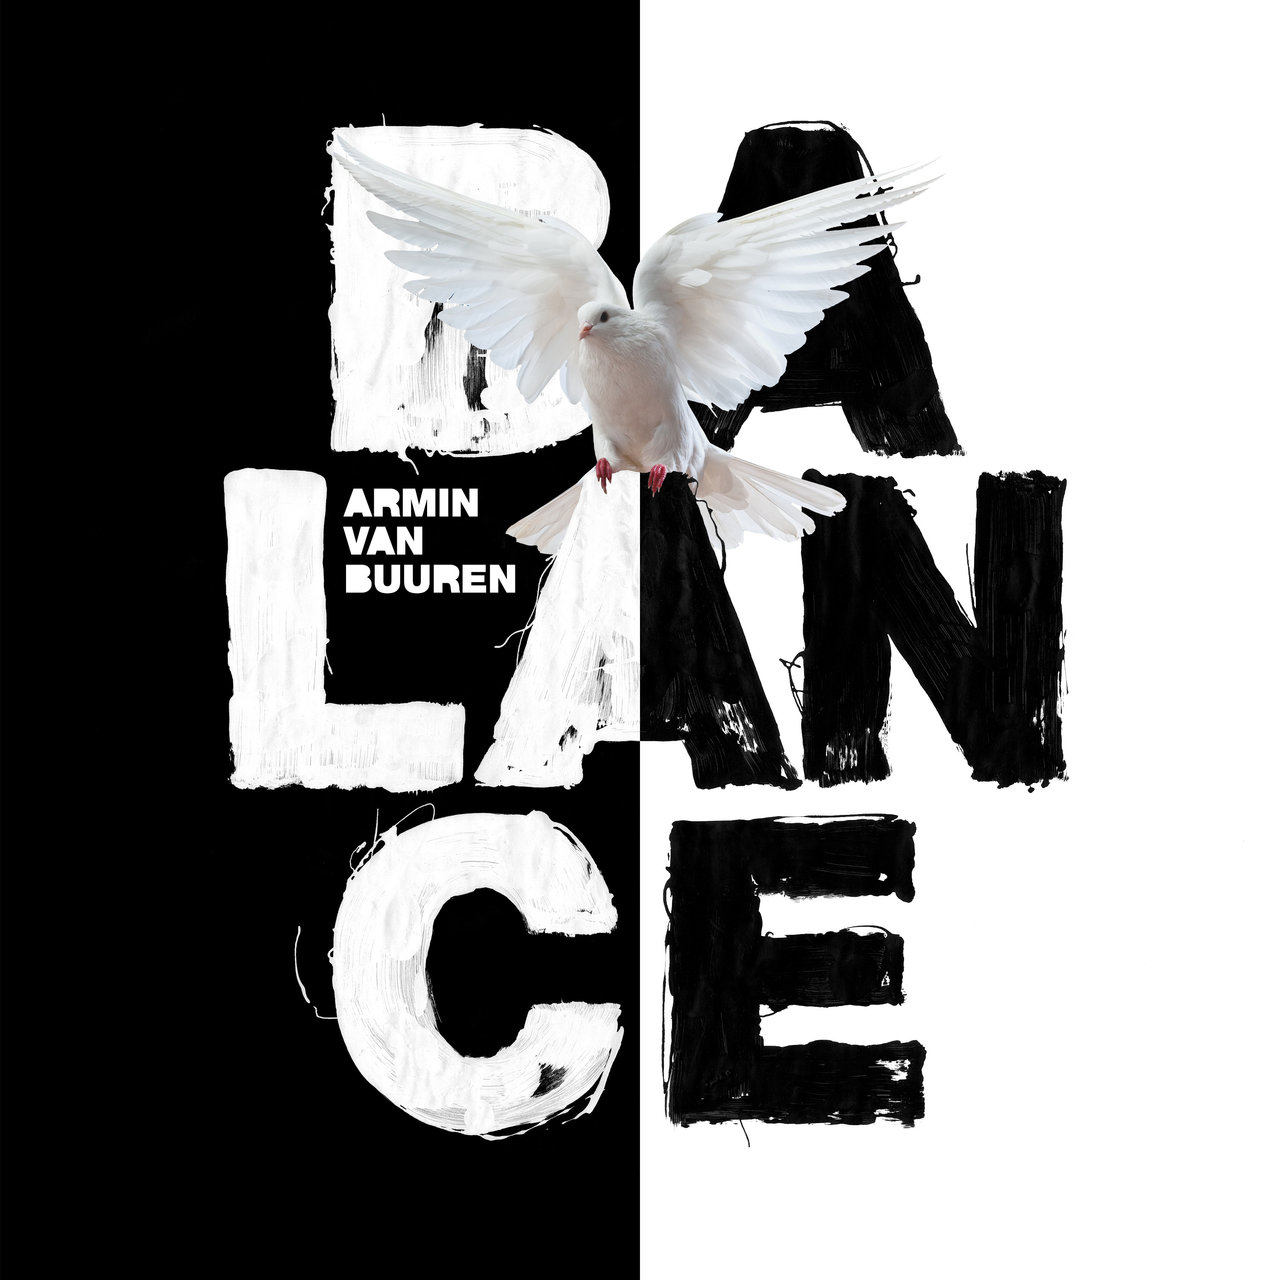 Armin van Buuren Balance cover artwork